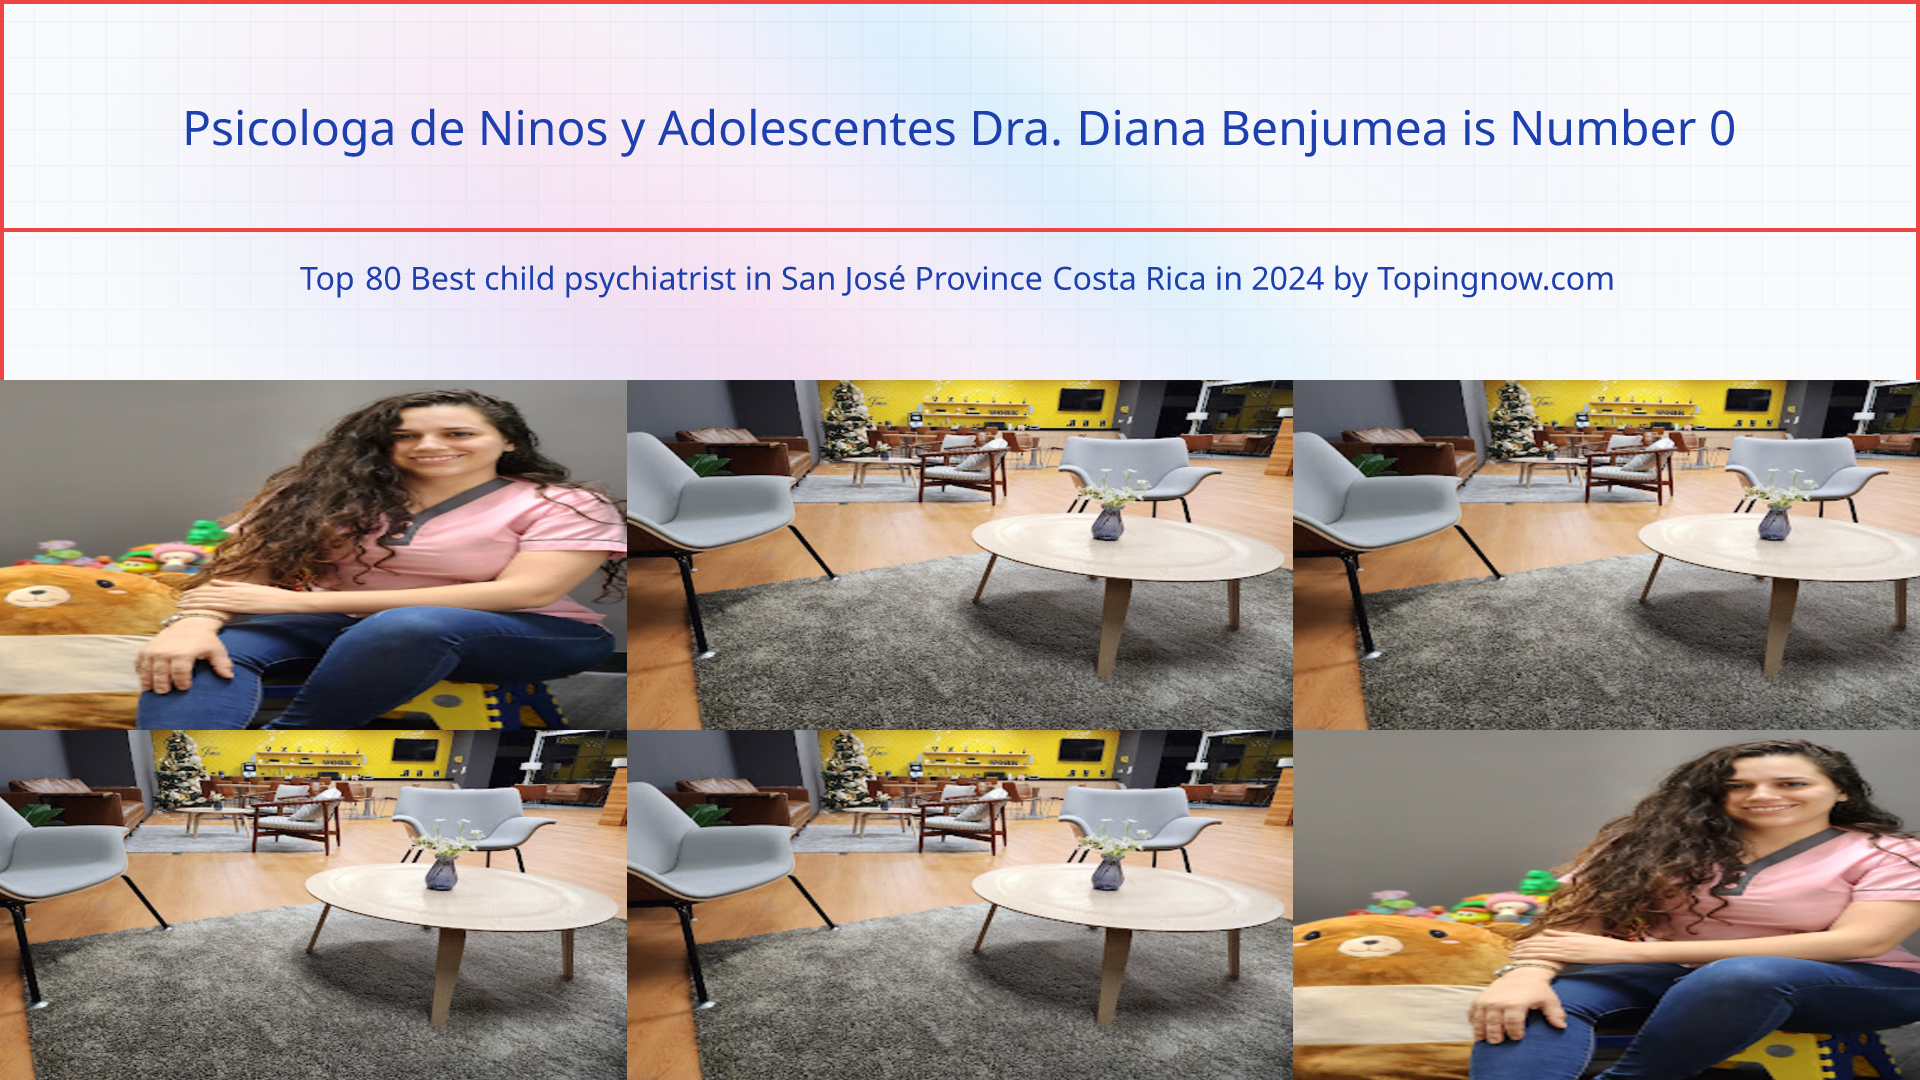 Psicologa de Ninos y Adolescentes Dra. Diana Benjumea: Top 80 Best child psychiatrist in San José Province Costa Rica in 2024